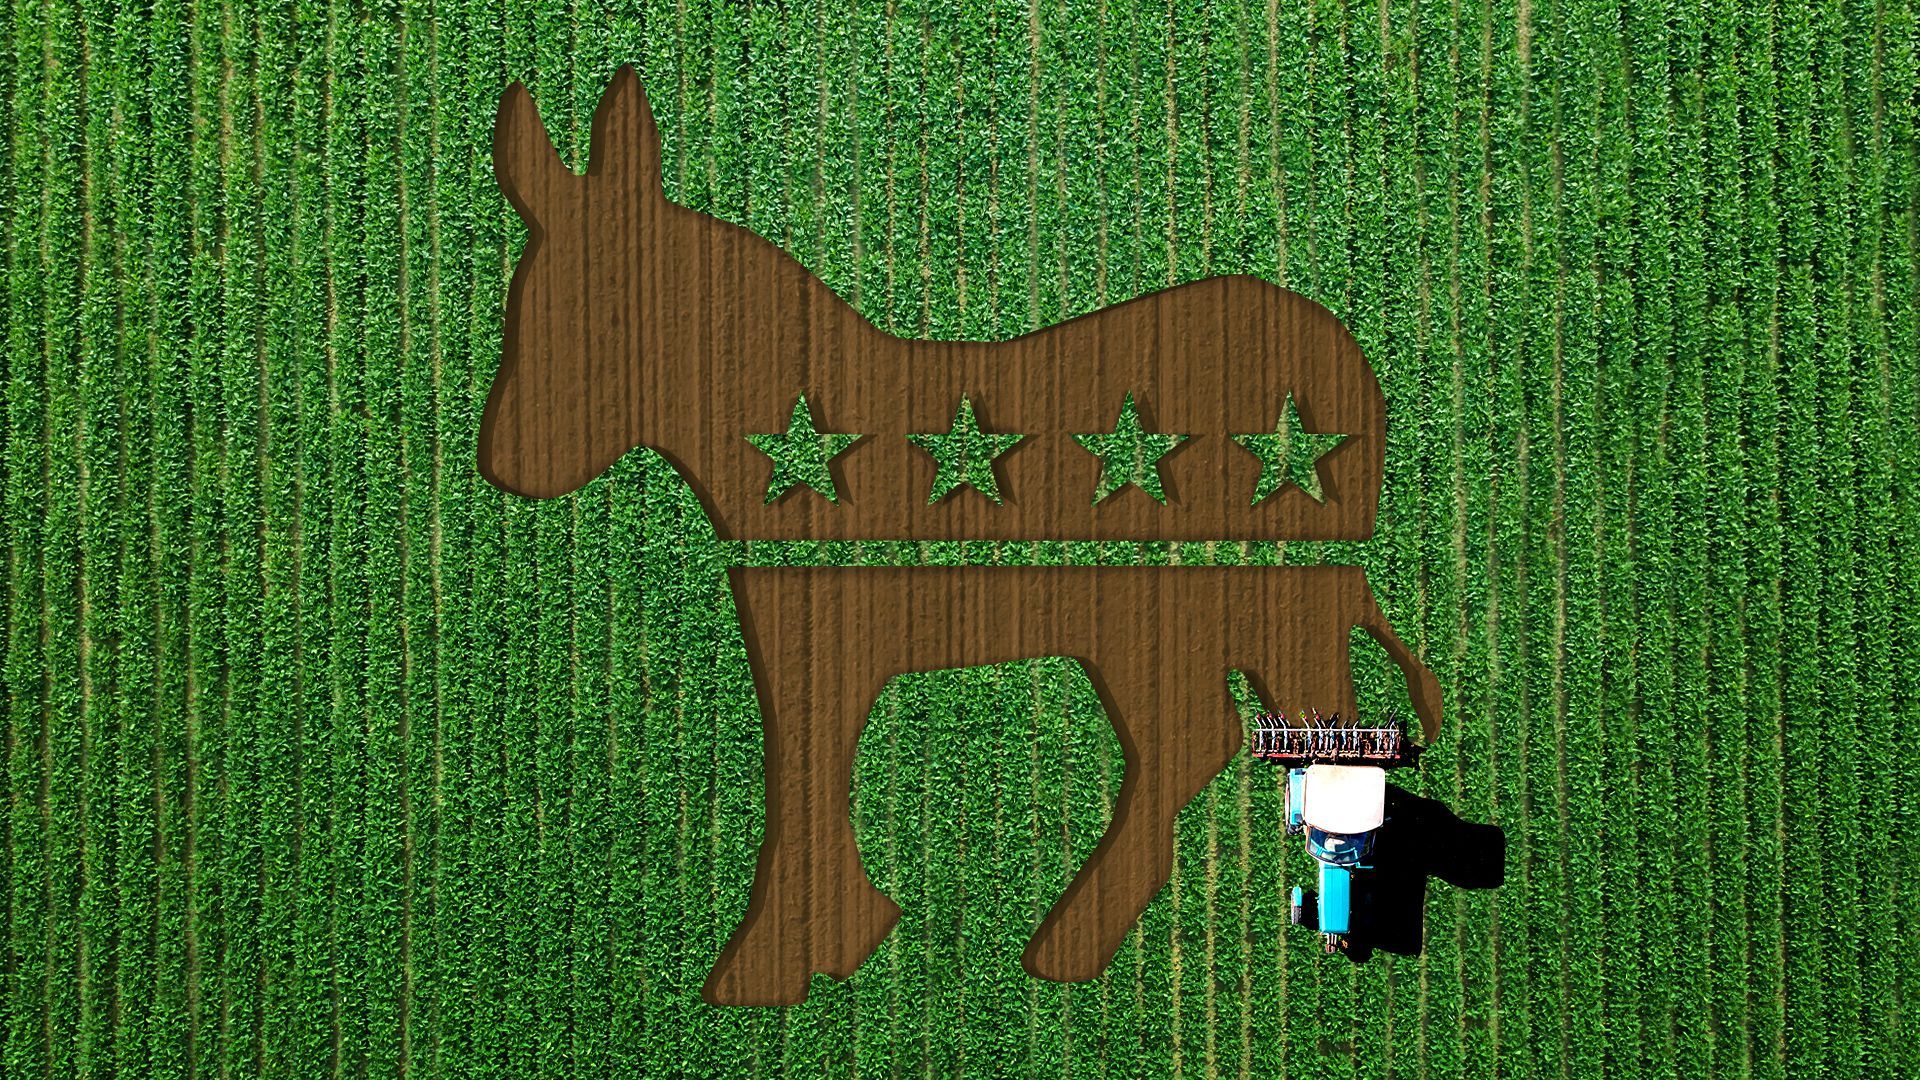 Democrat donkey mowed into a field